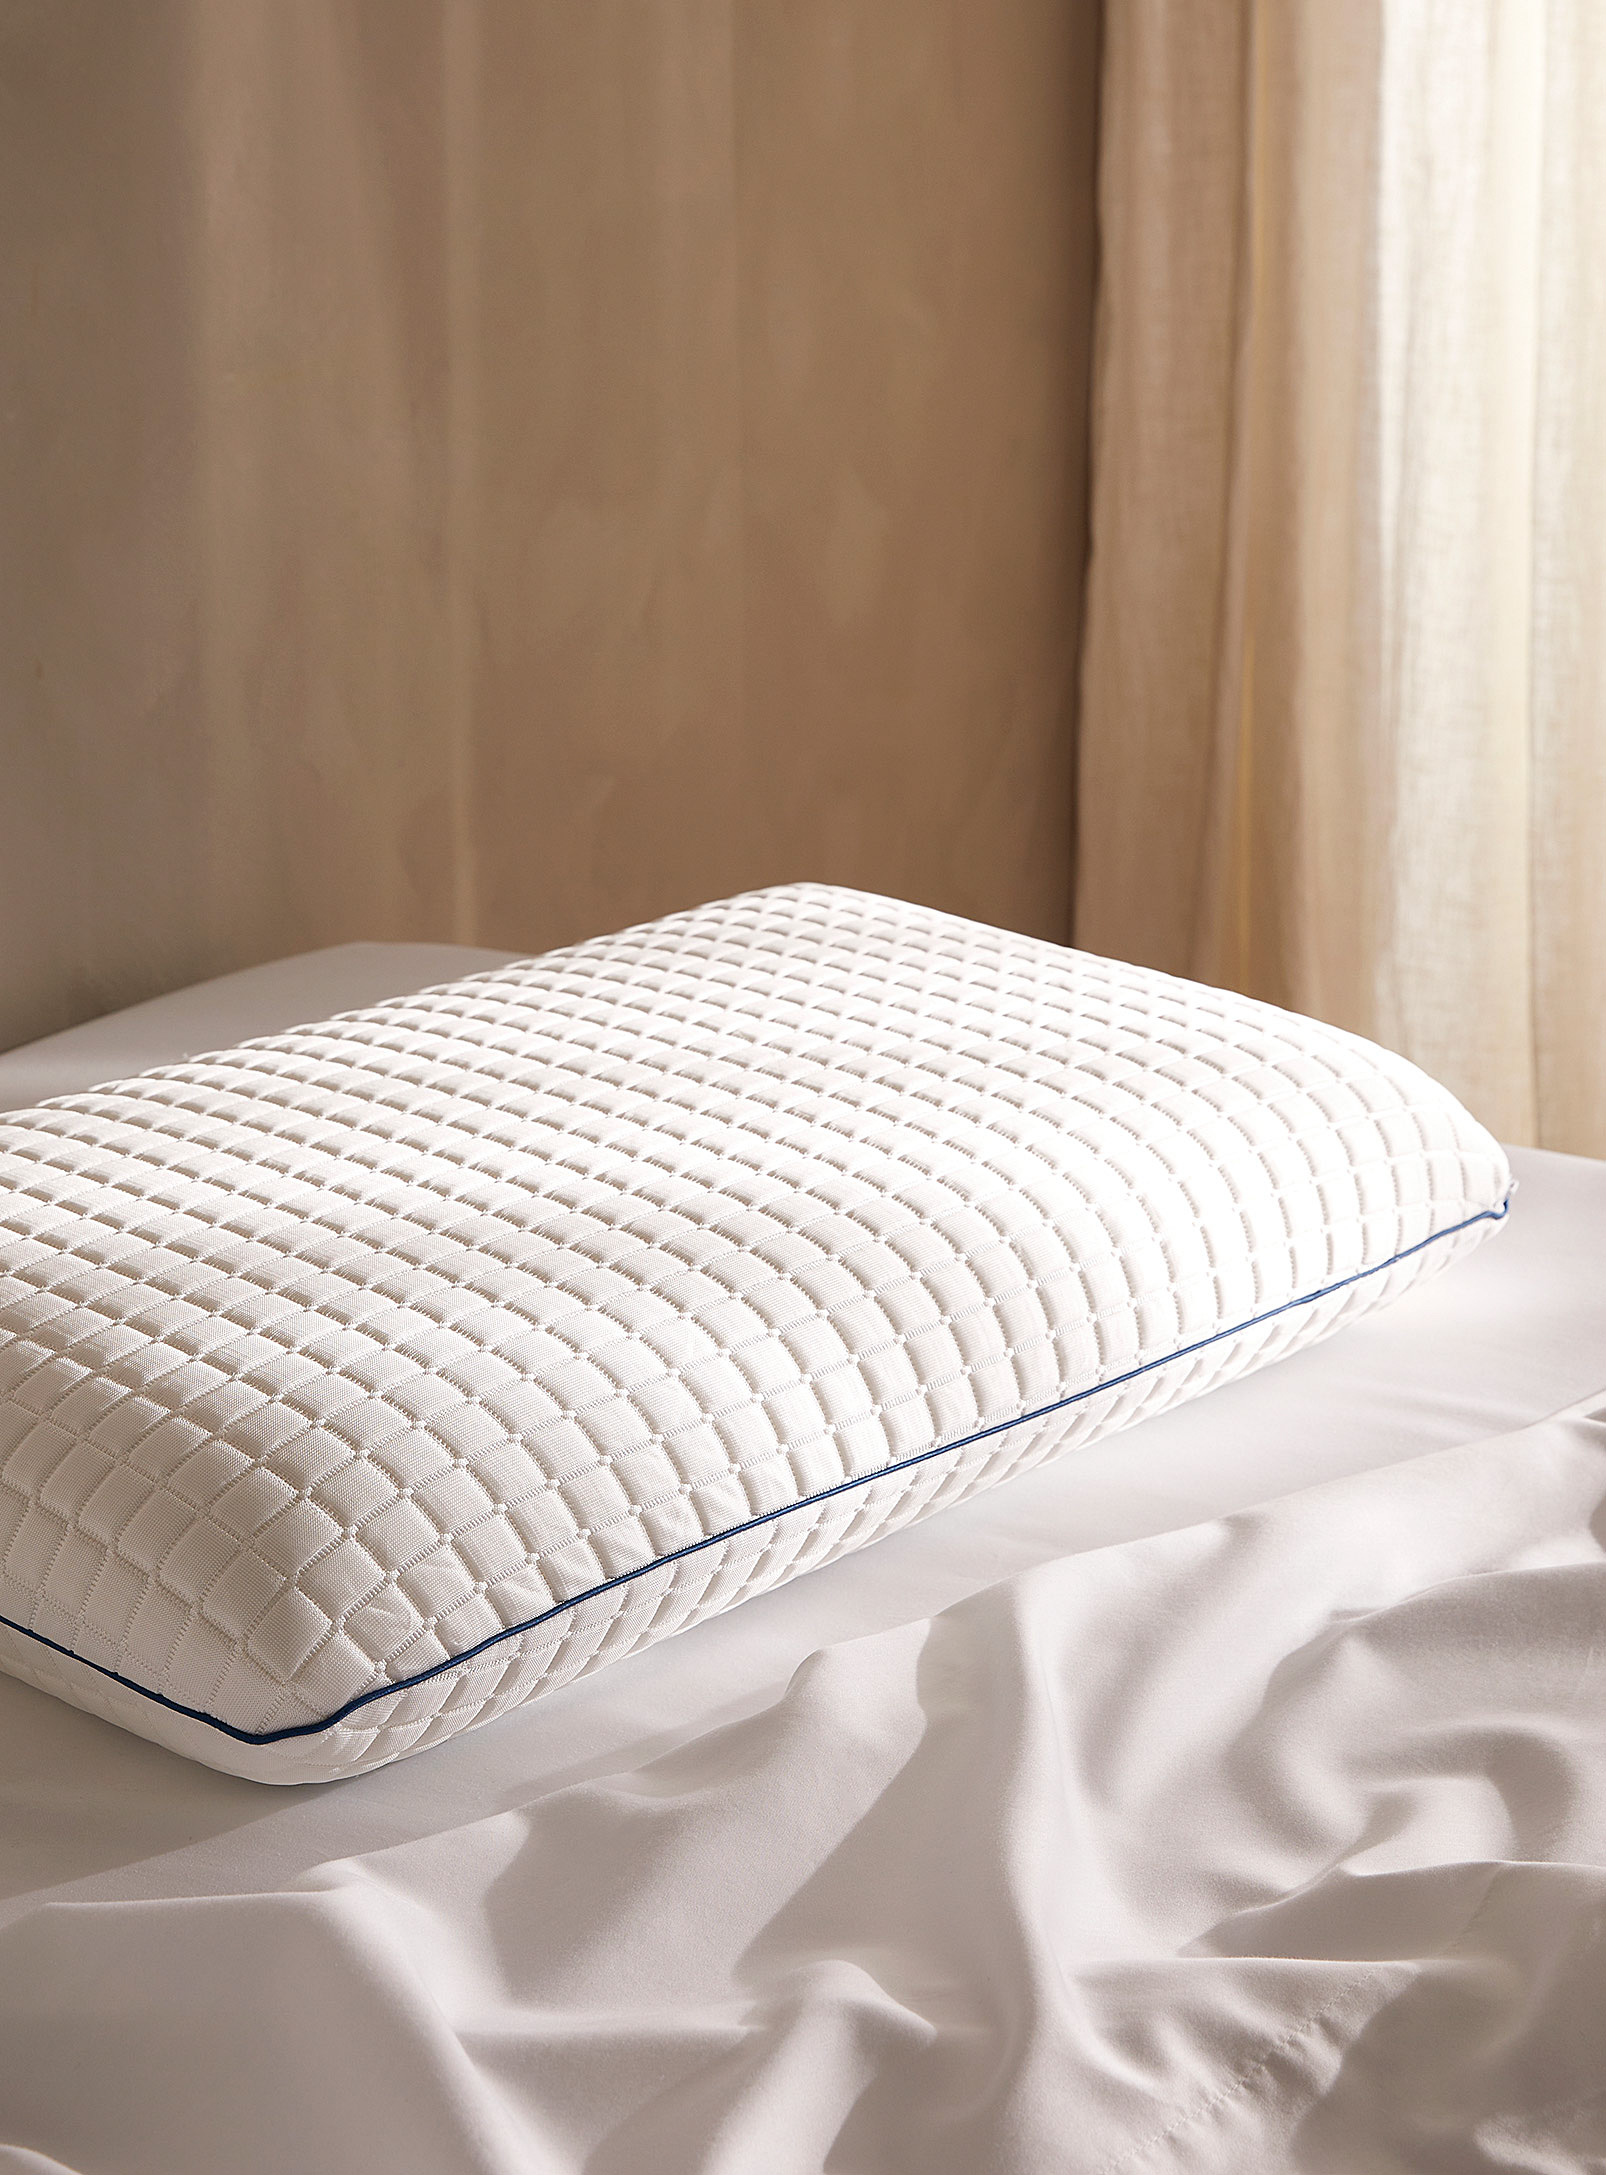 Simons Maison - Cooling gel memory foam pillow Firm support Queen size